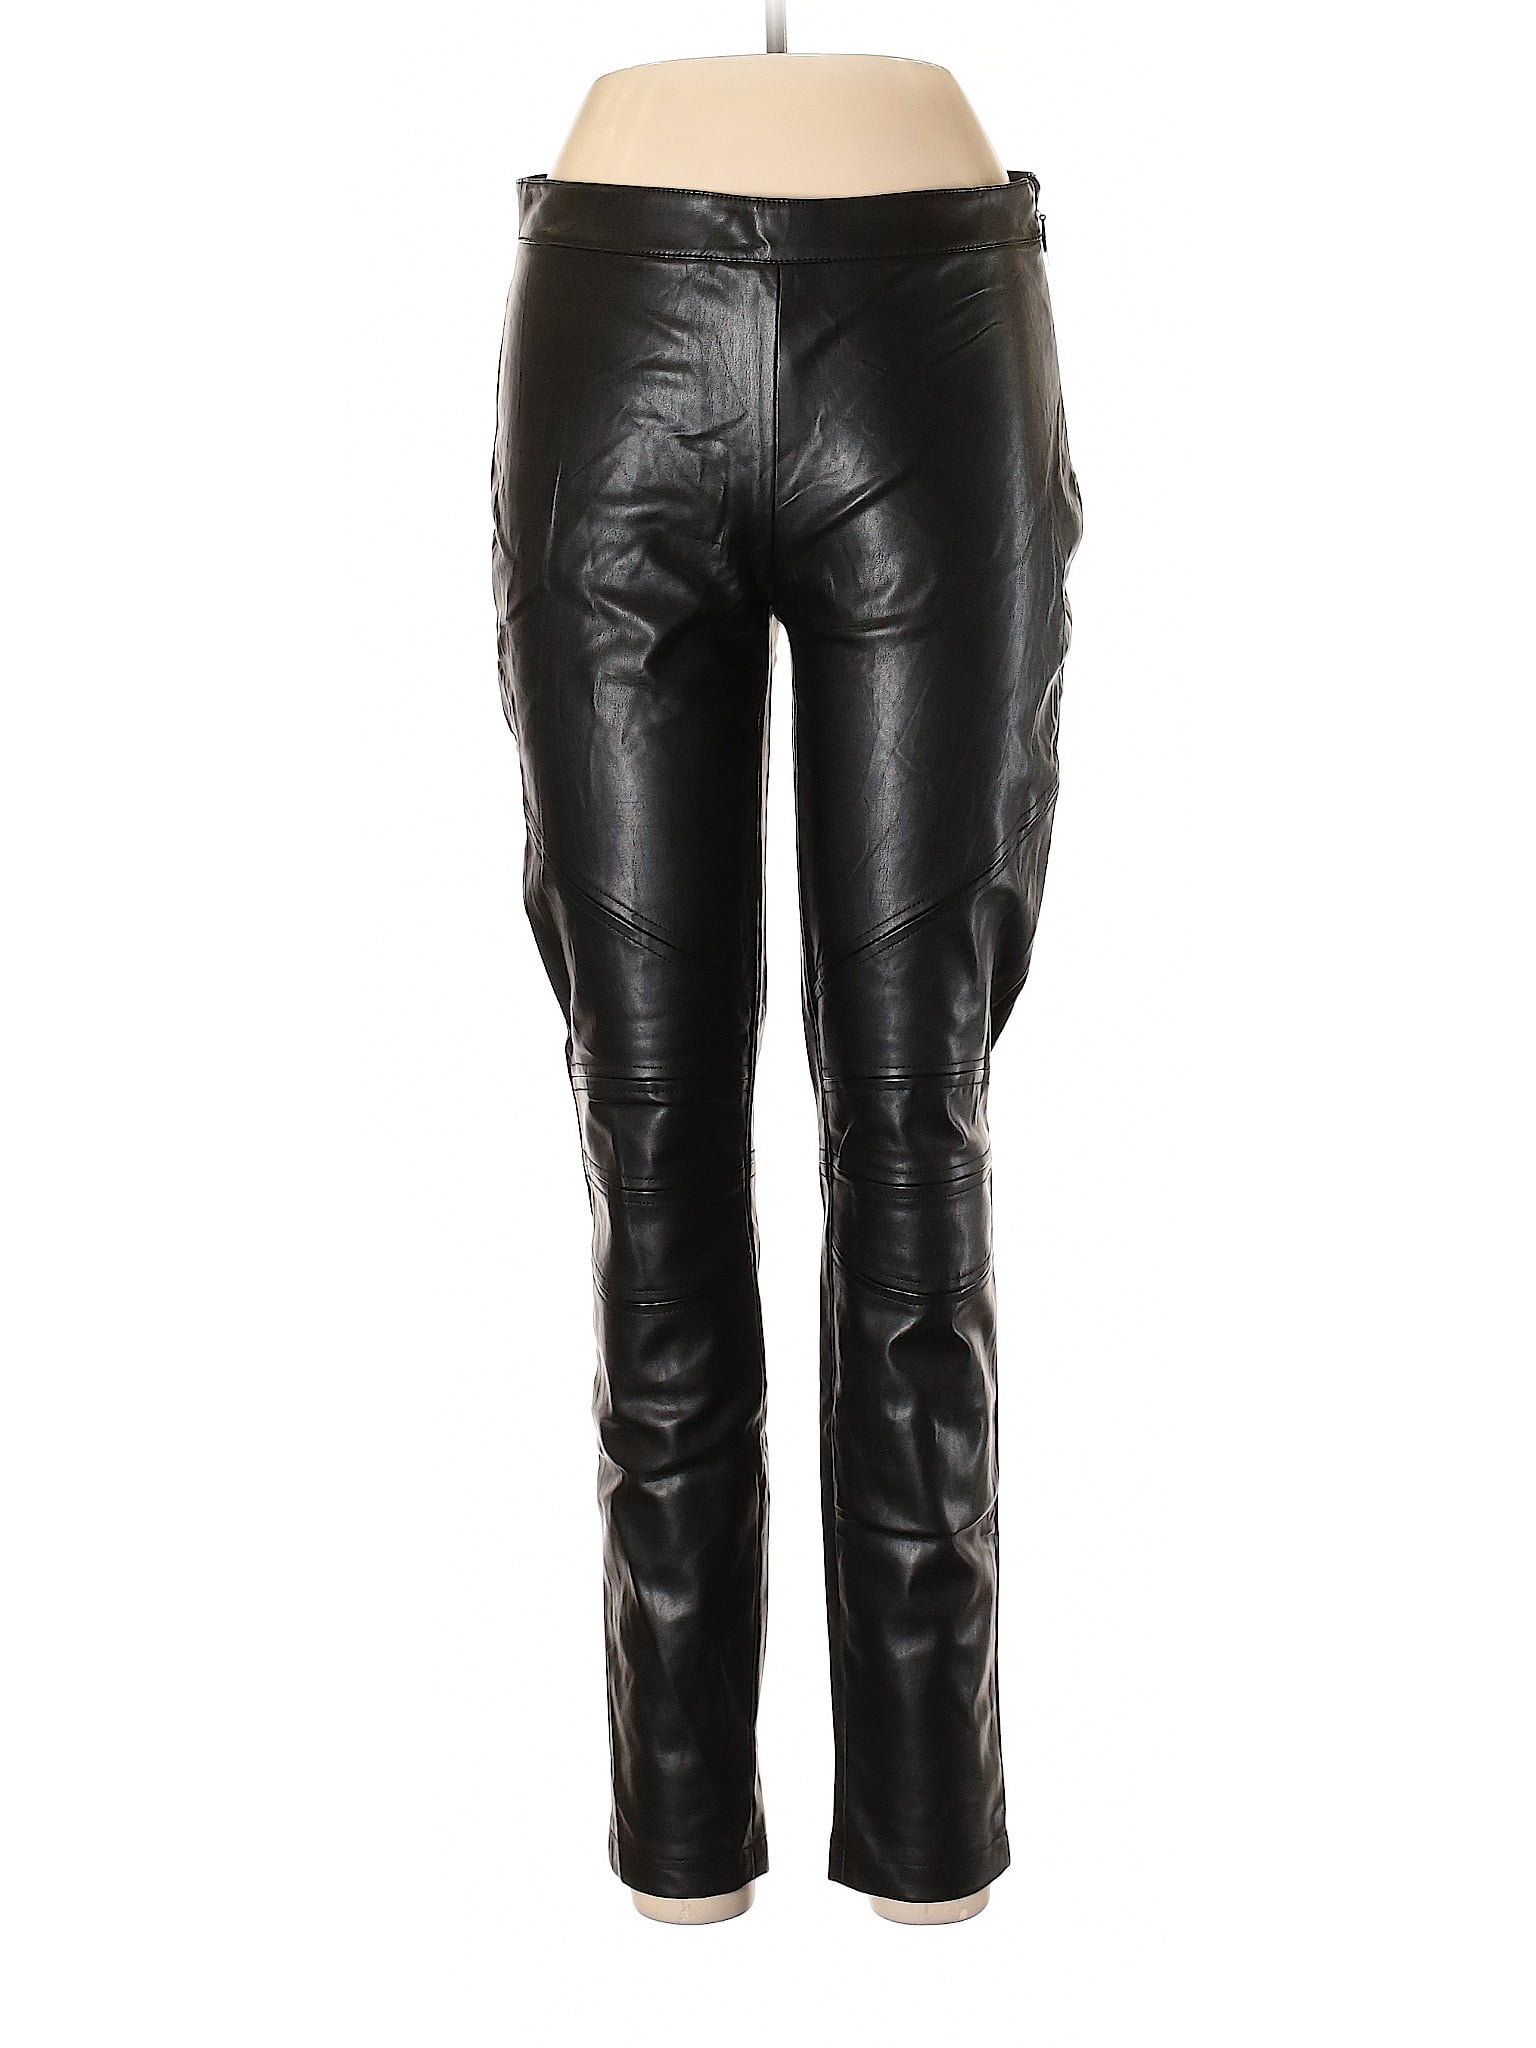 bebe - Pre-Owned Bebe Women's Size 10 Faux Leather Pants - Walmart.com ...